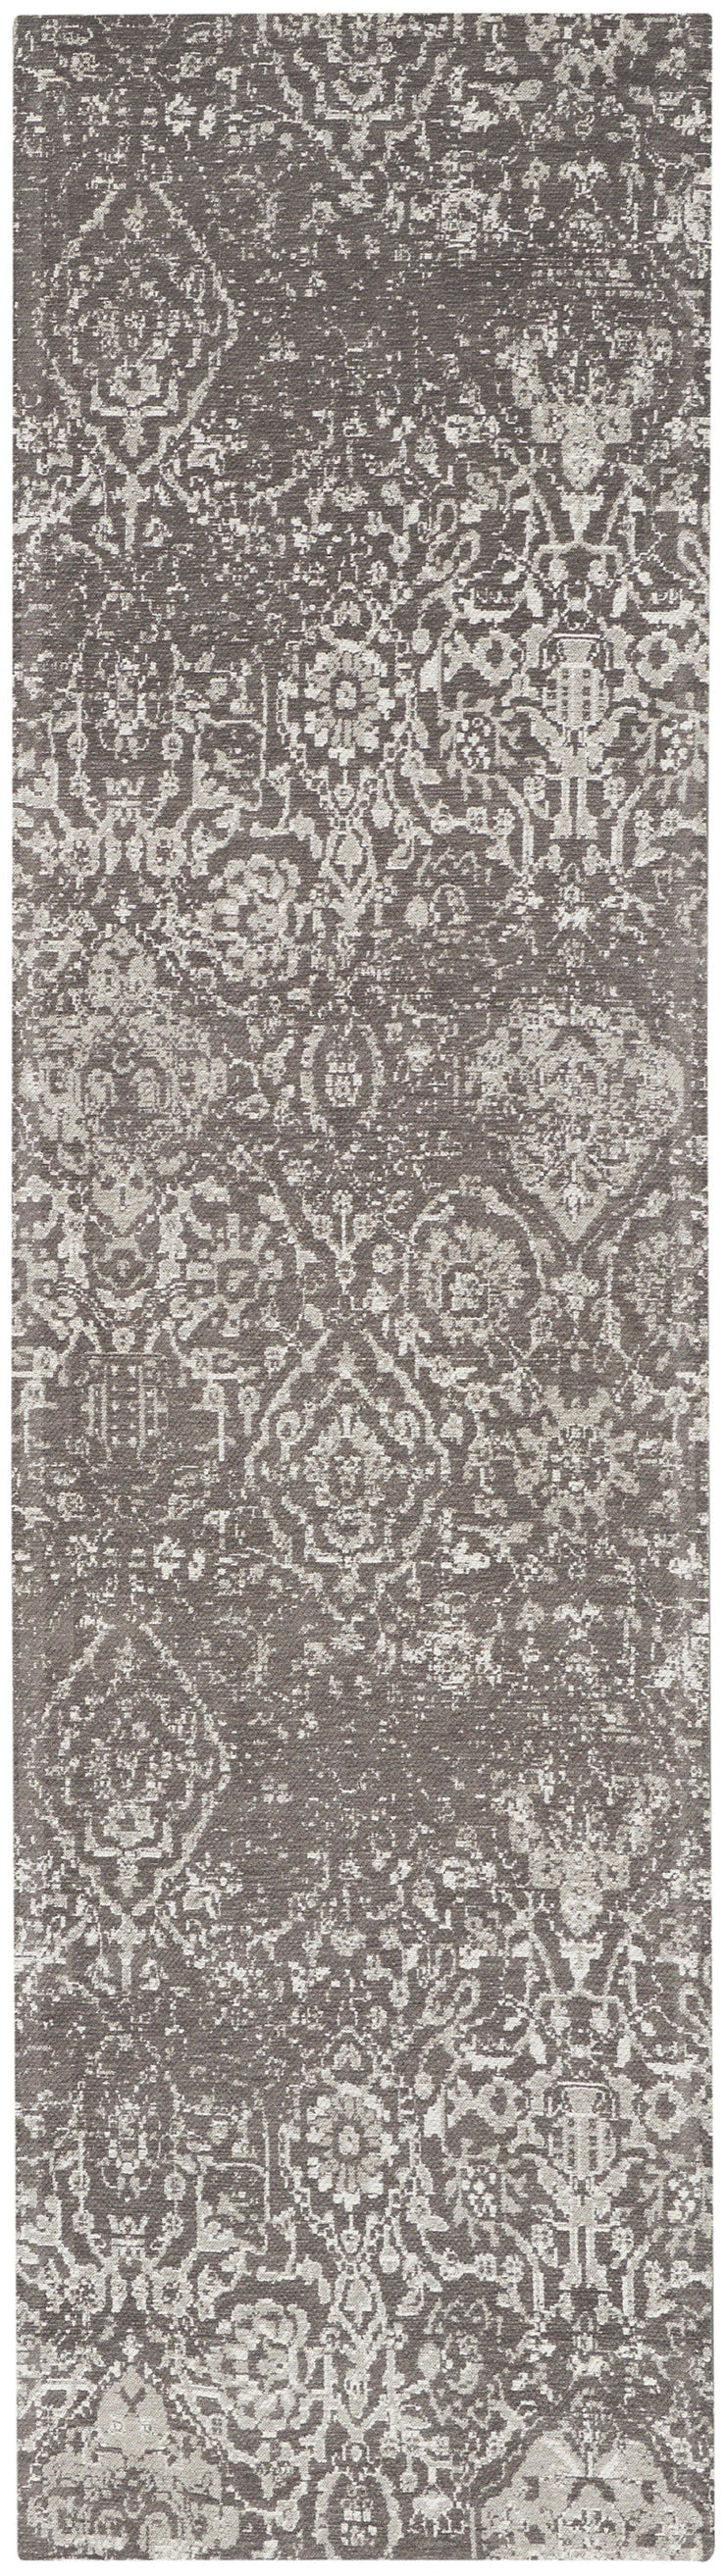 damask dark grey rug by nourison 99446787897 redo 2